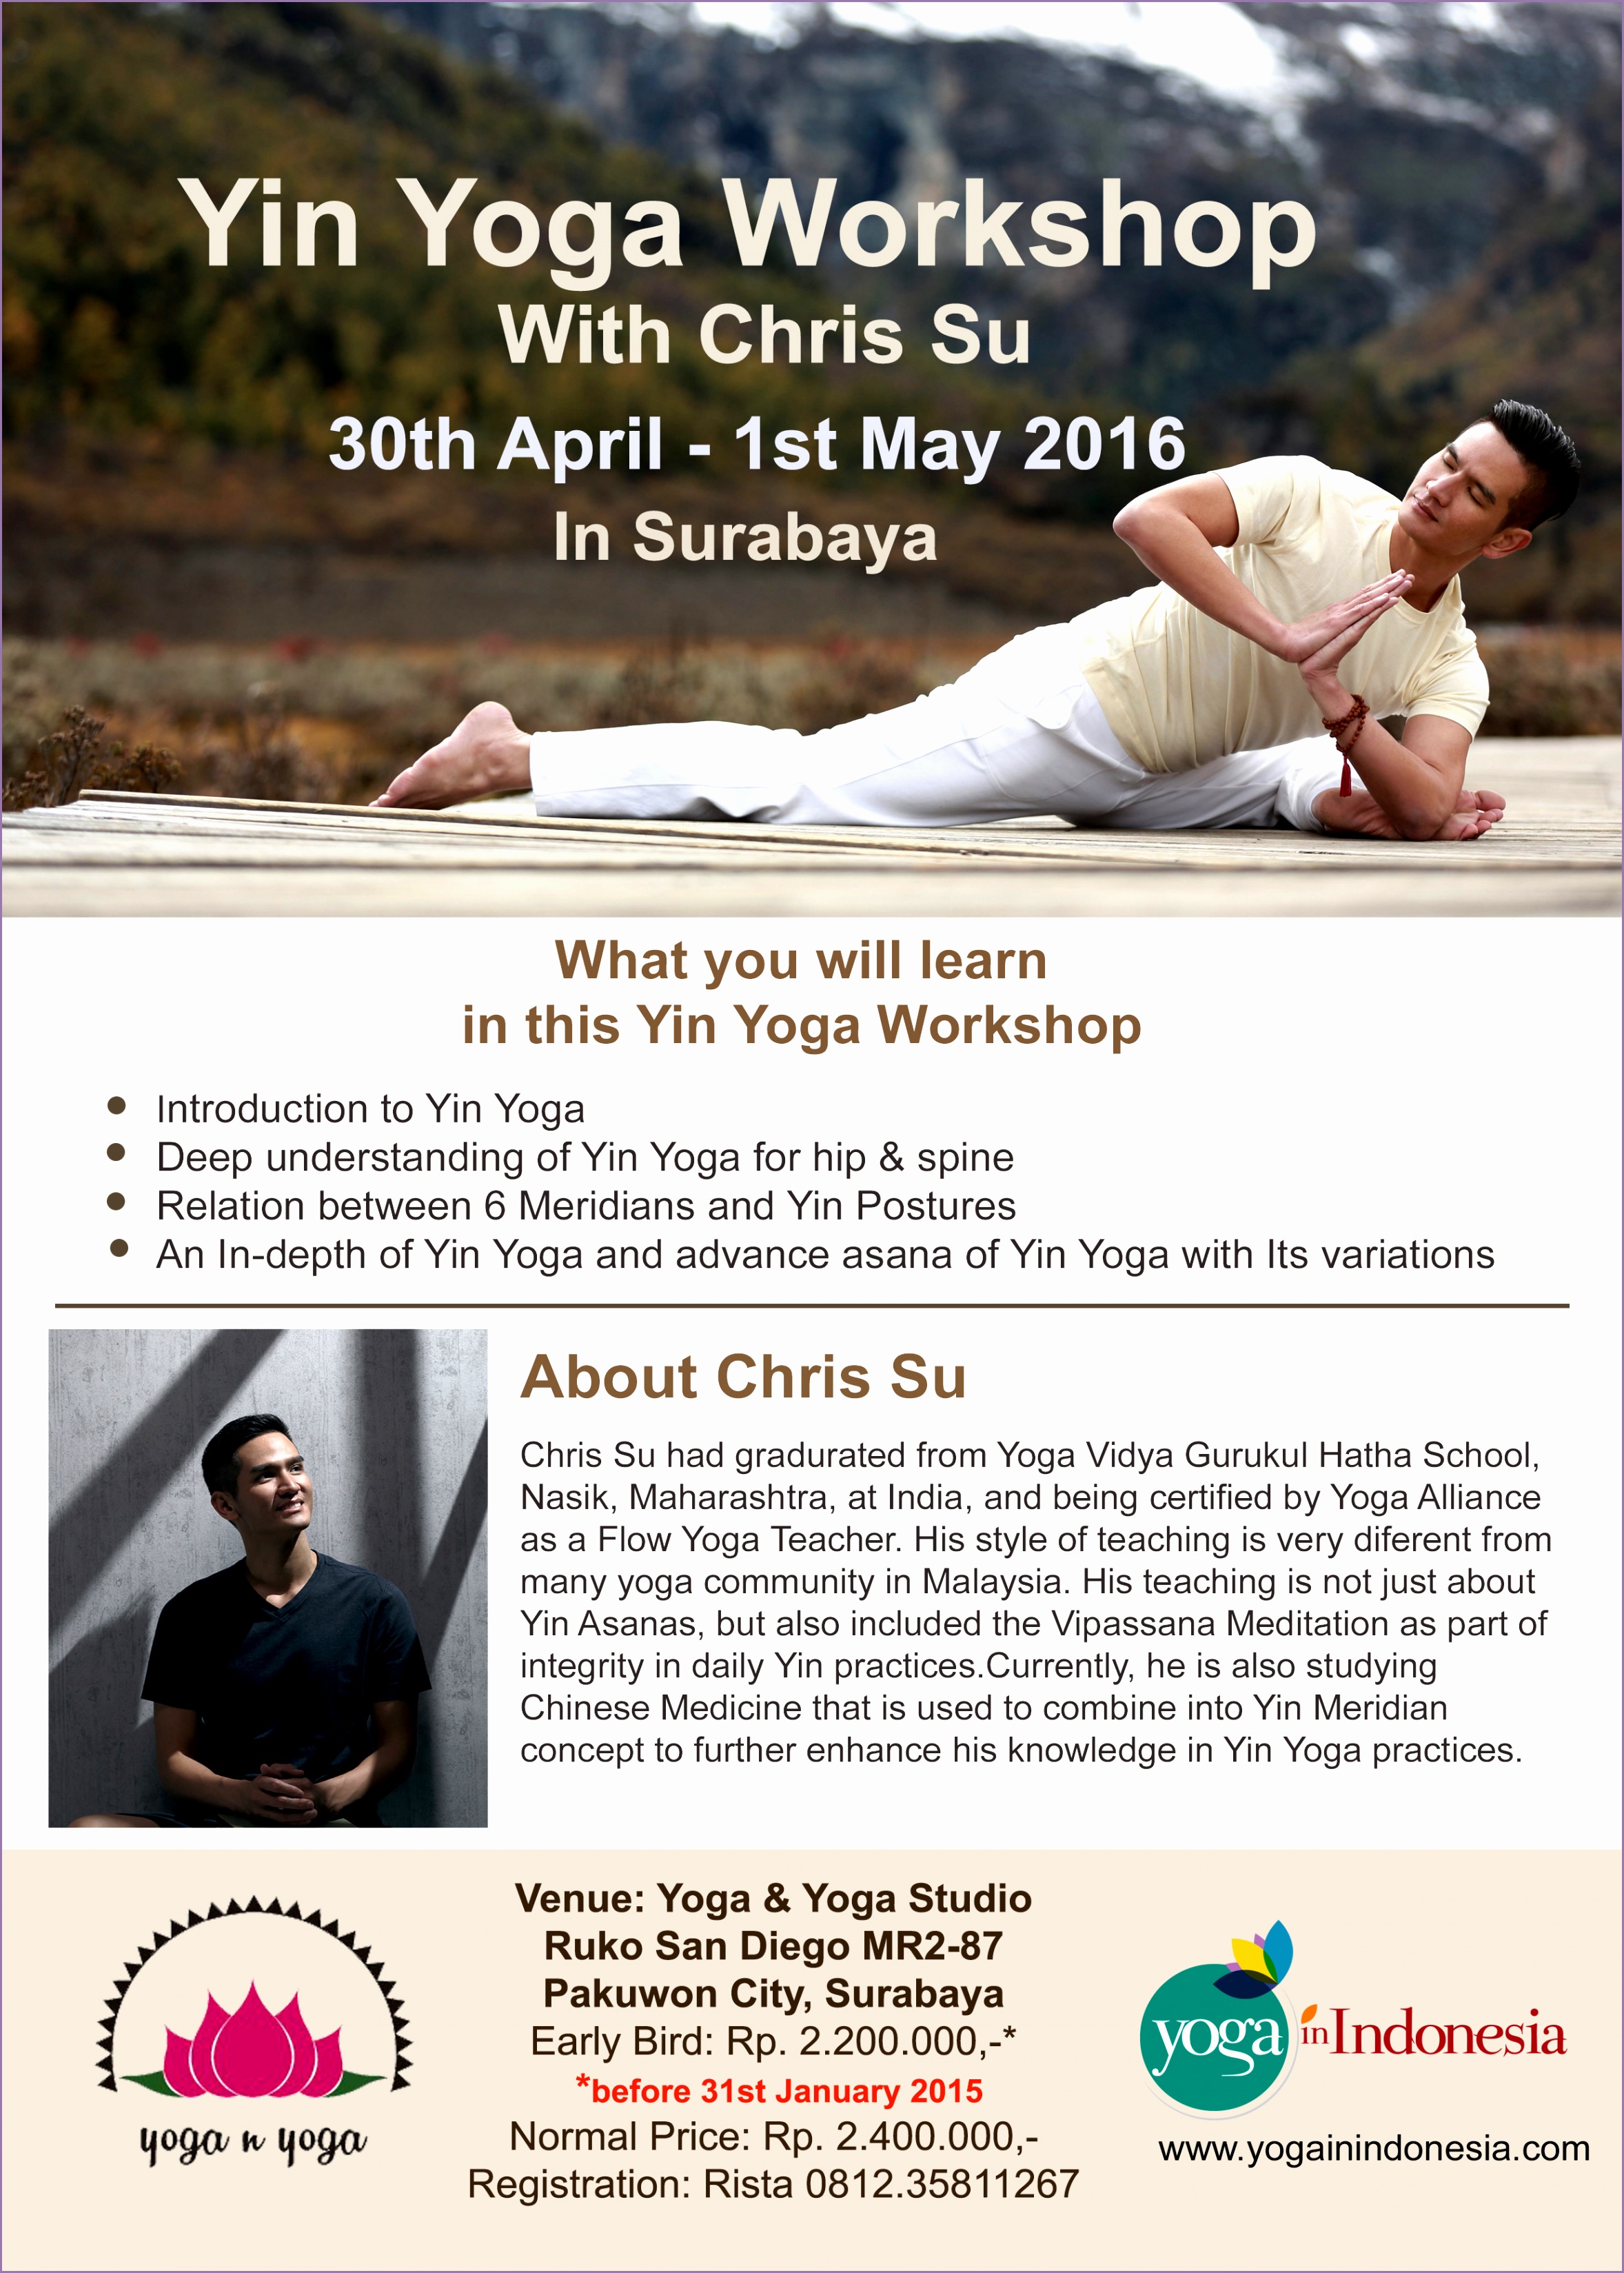 plete Beginners Yoga Workshop 2017 retreat in Surrey photo 0